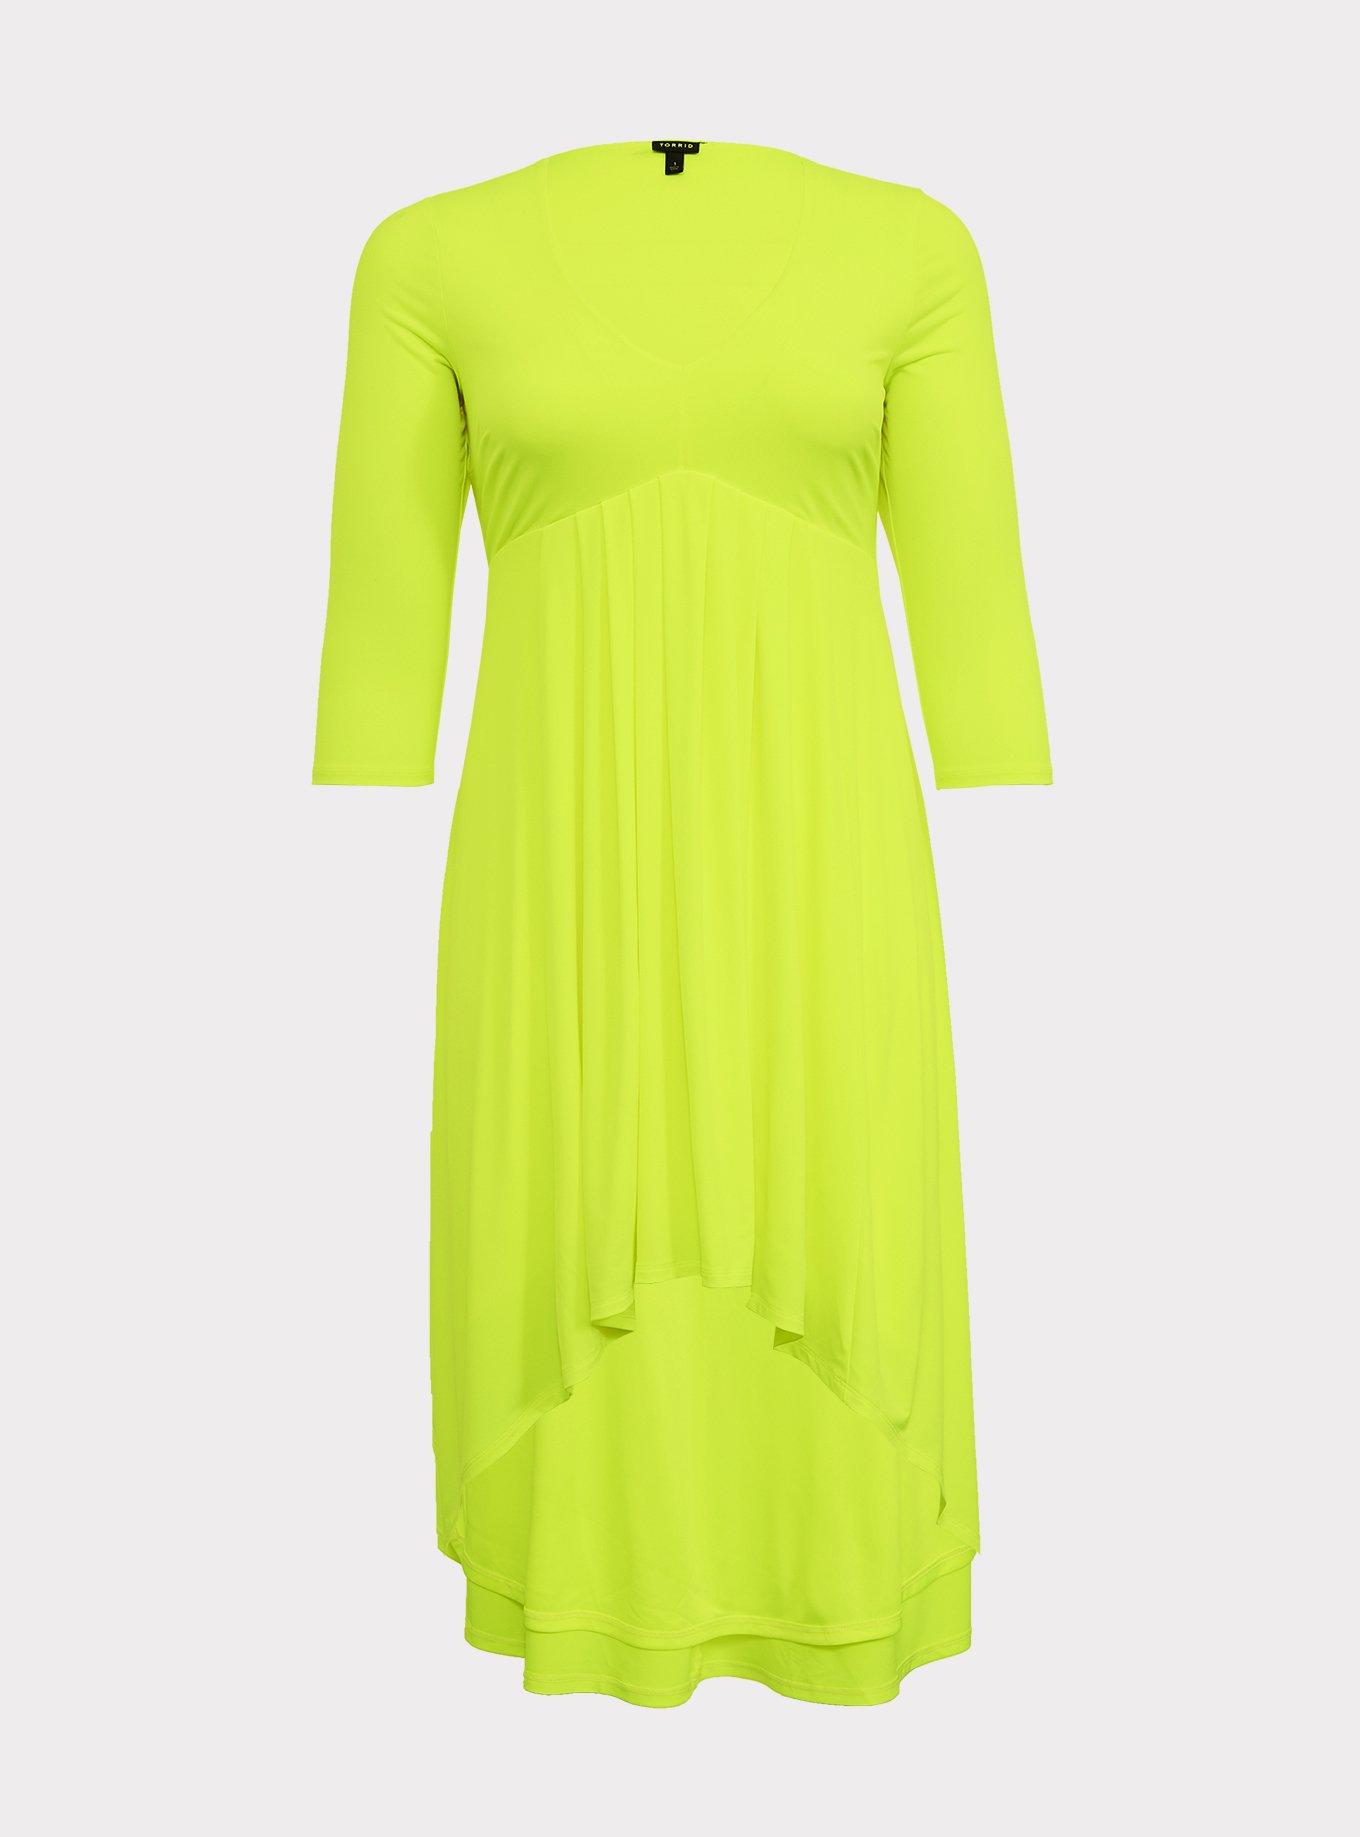 Plus Size - Neon Yellow Studio Knit Hi-Lo Dress - Torrid